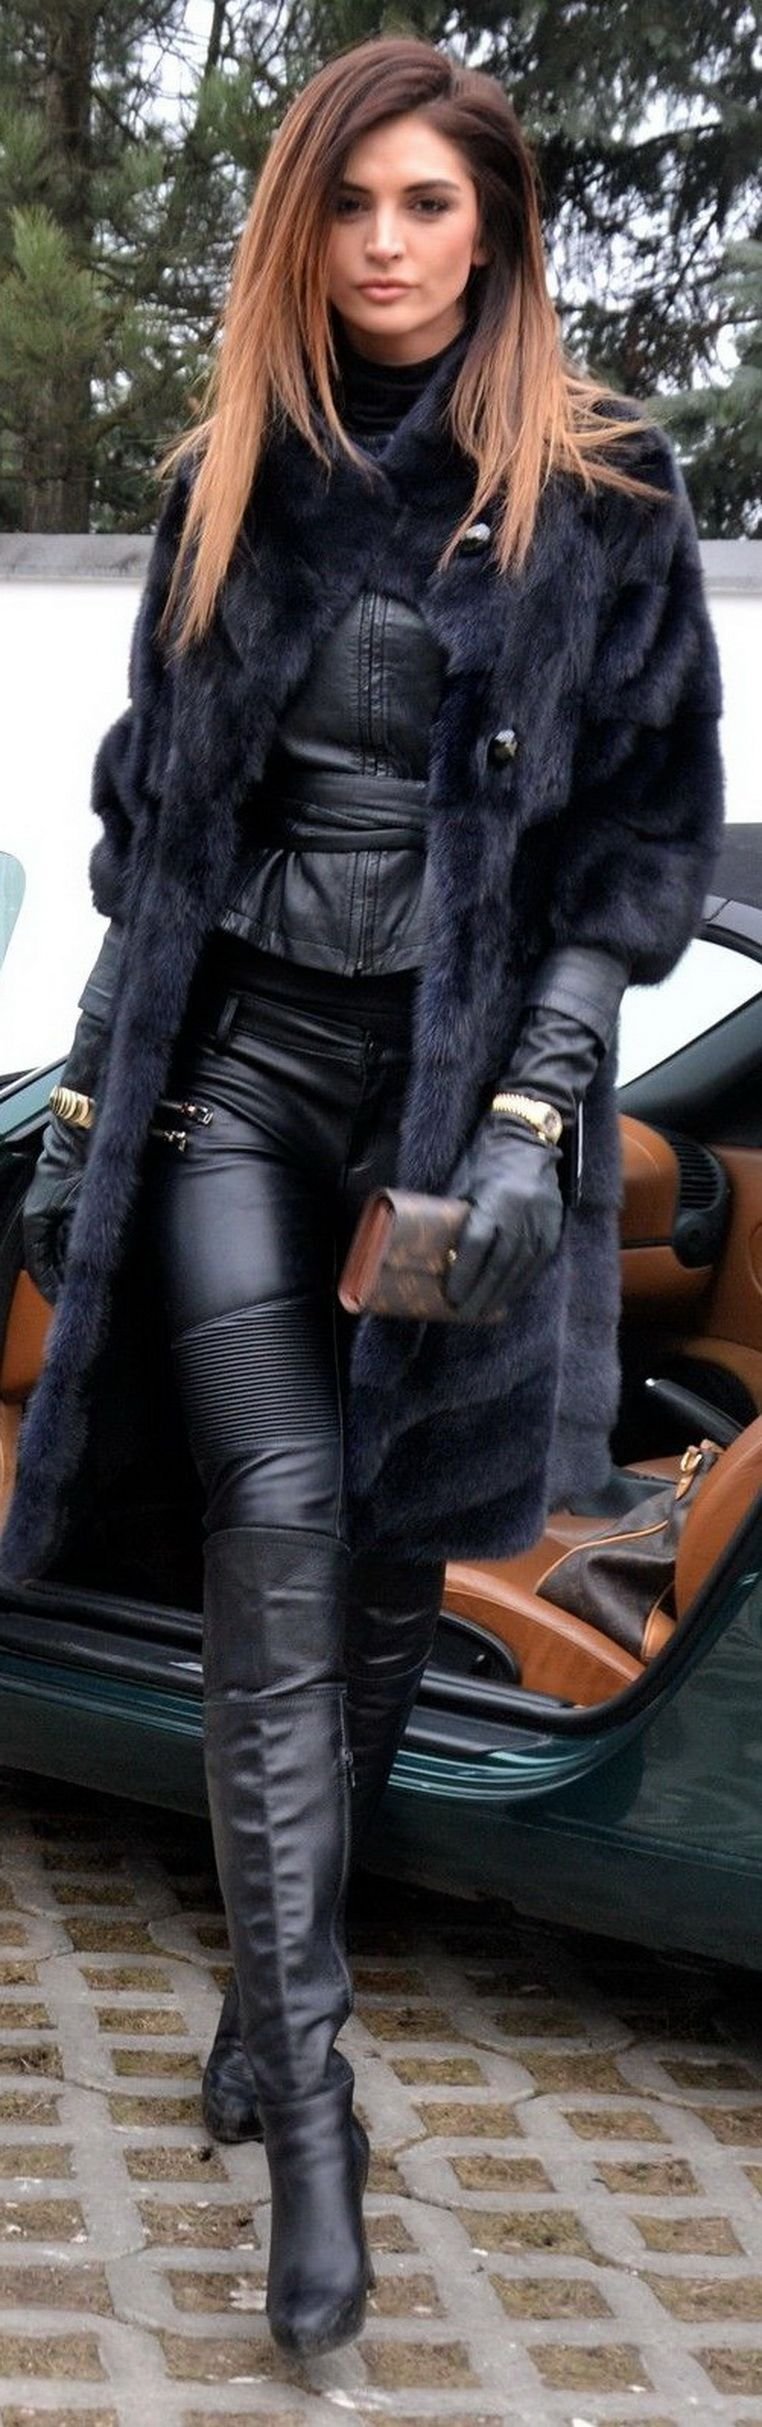 Selin Leather and fur кожаное пальто